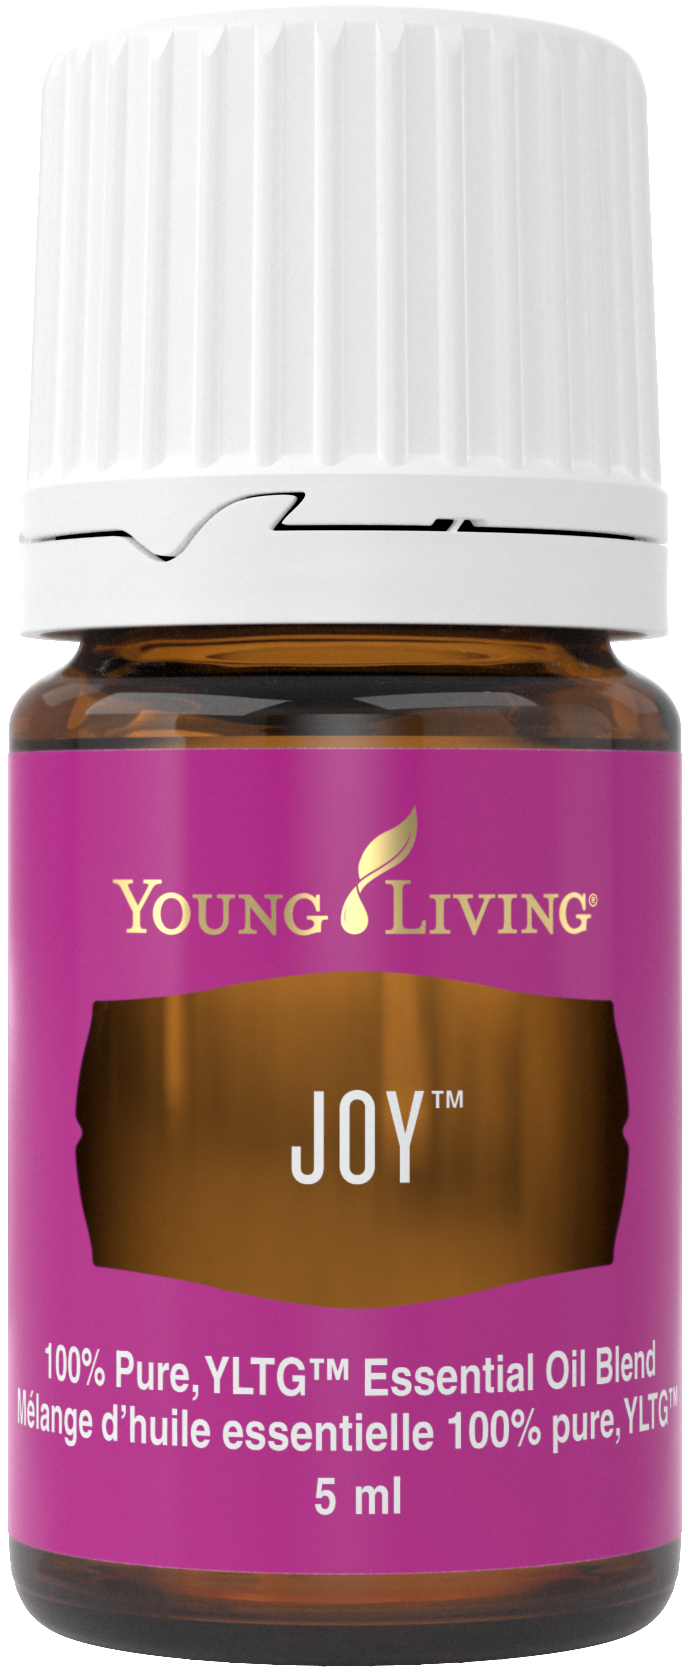 joy essential oil